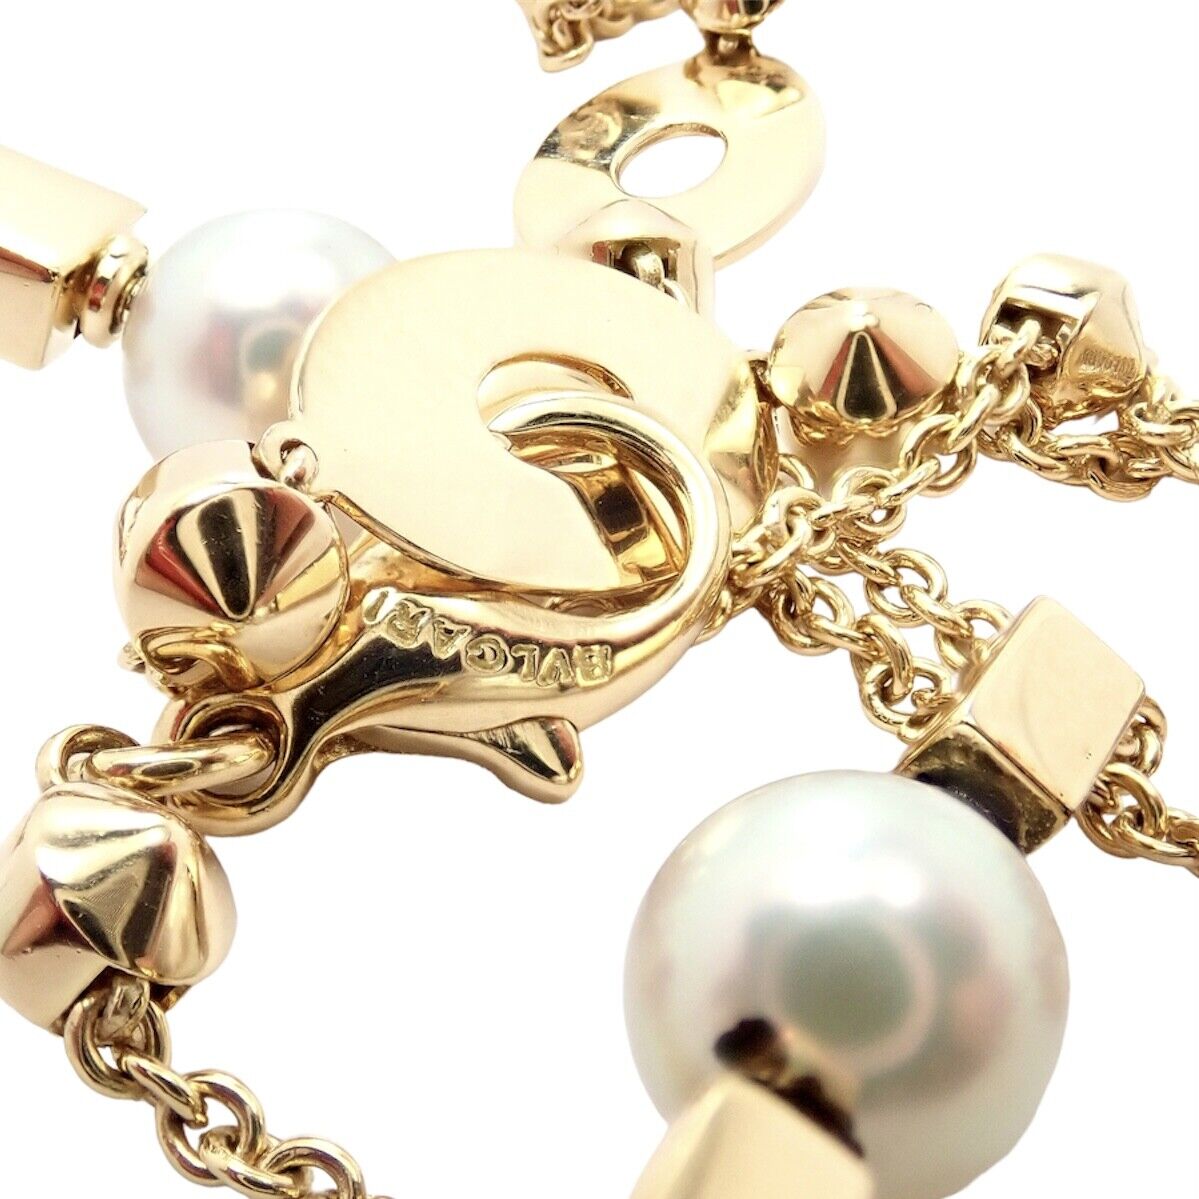 Bvlgari Jewelry & Watches:Fine Jewelry:Necklaces & Pendants Authentic! Bulgari Bvlgari Lucea 18k Yellow Gold 34" 7mm Pearl Necklace